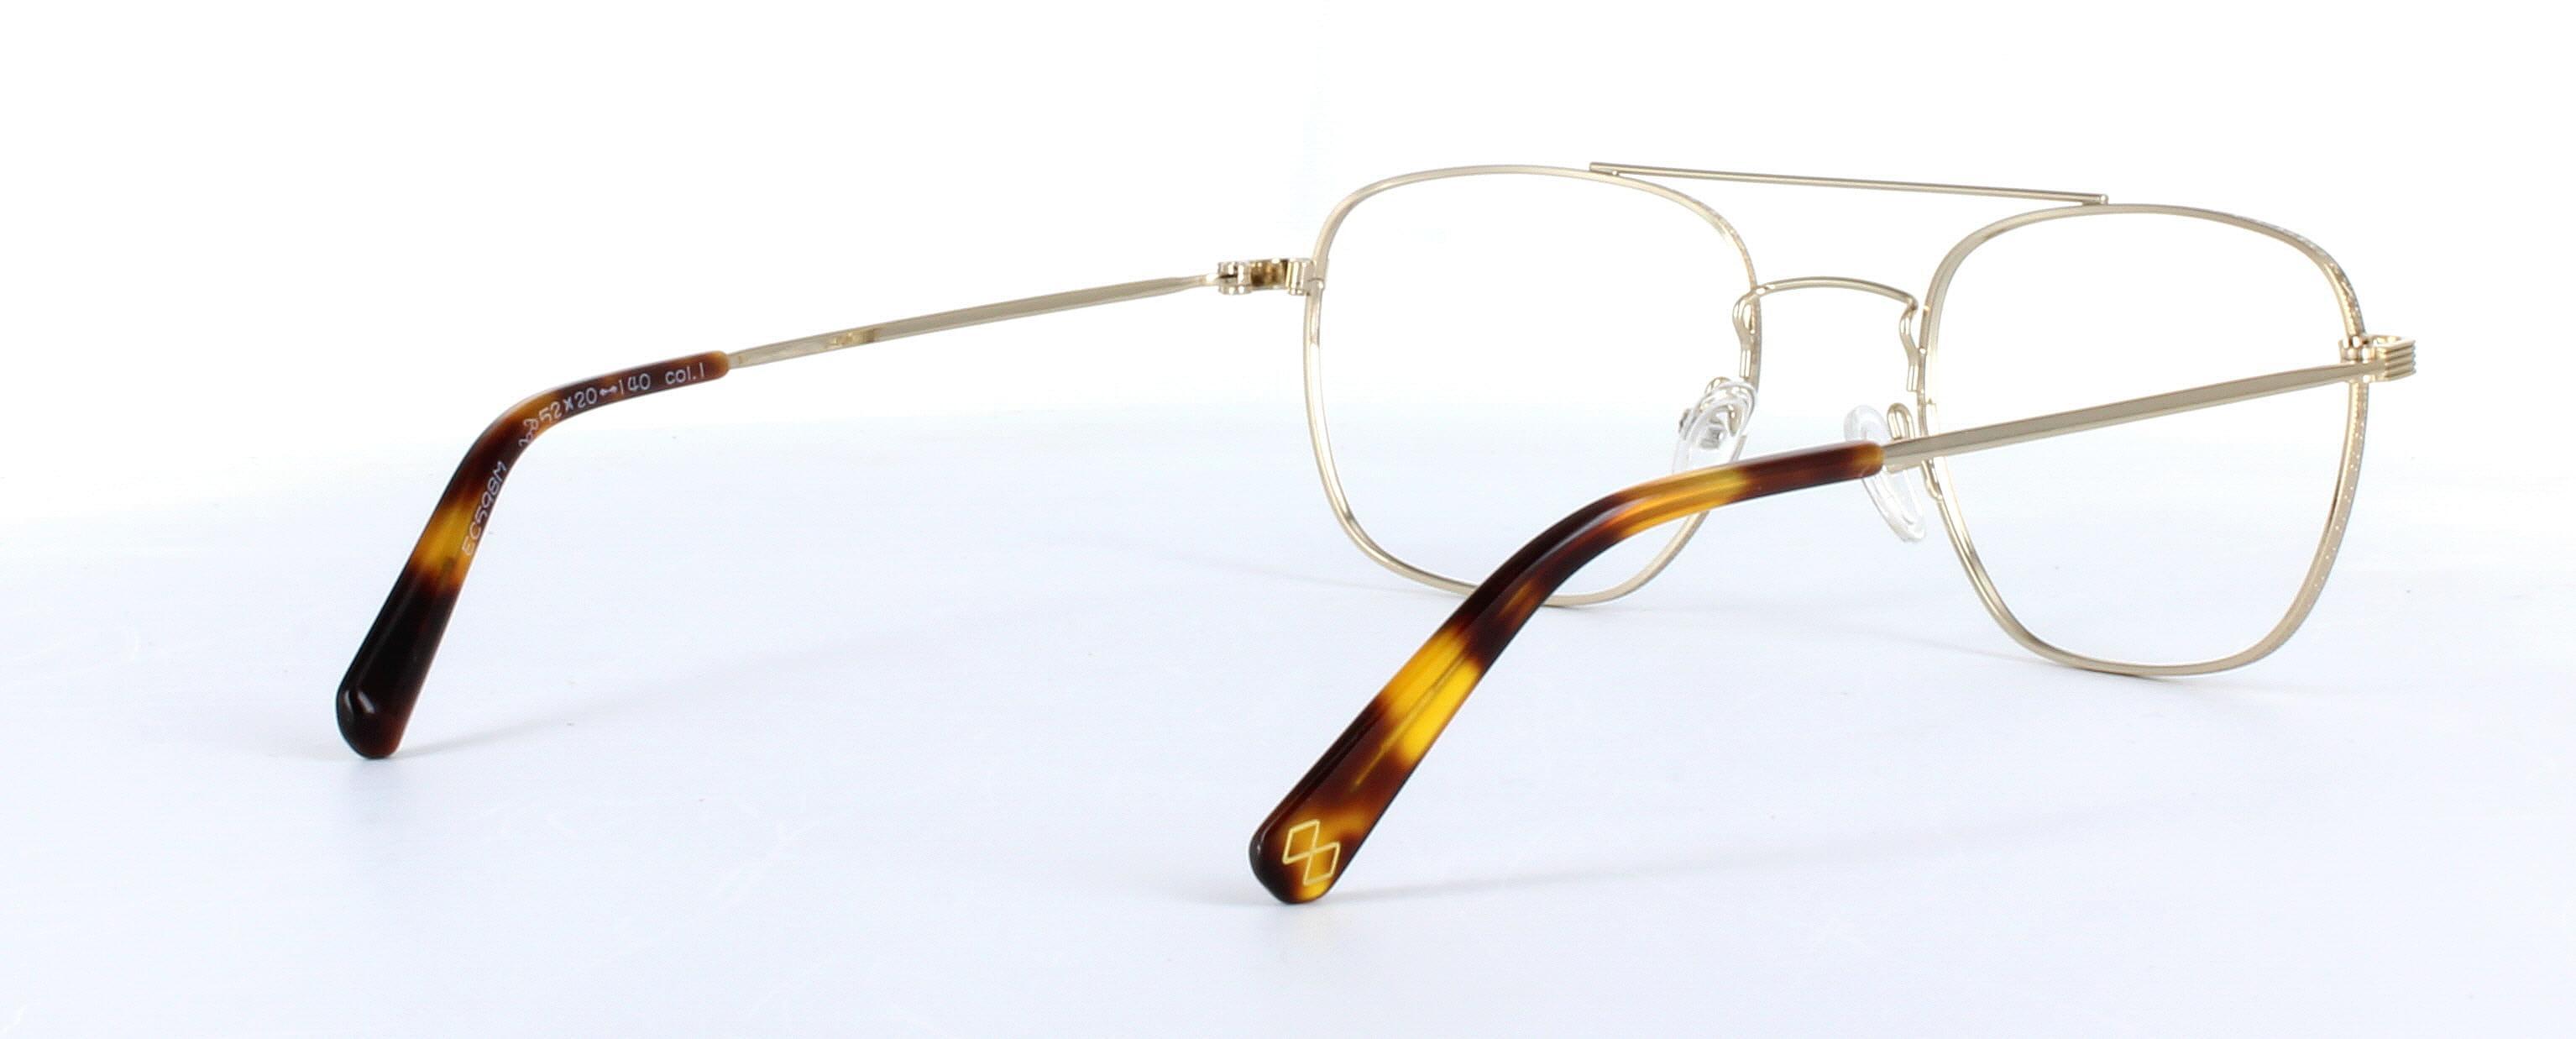 Eyecroxx 598 Black and Gold Full Rim Aviator Metal Glasses - Image View 4